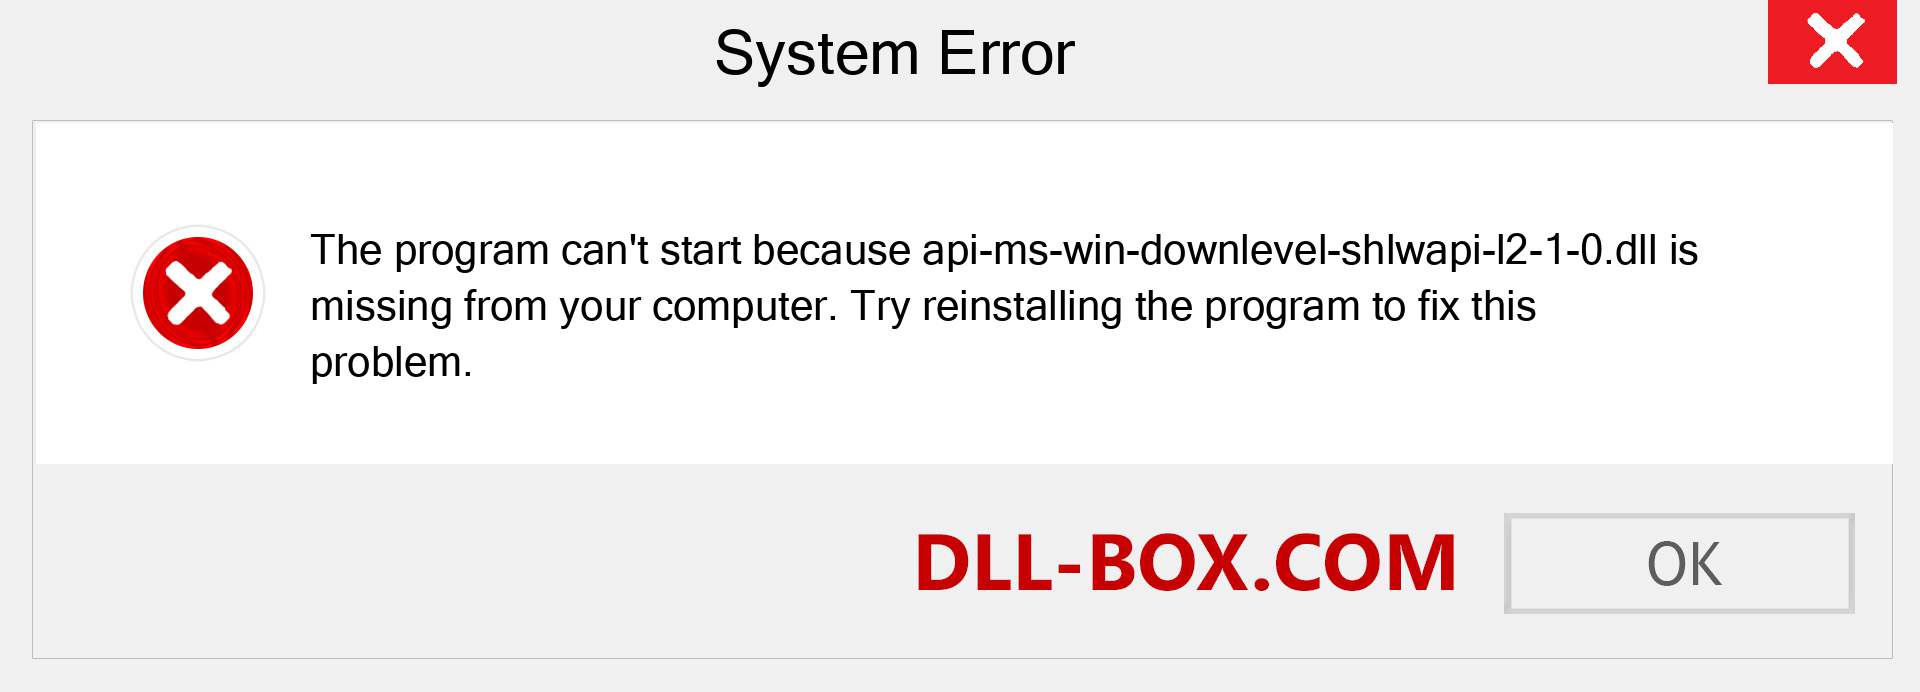  api-ms-win-downlevel-shlwapi-l2-1-0.dll file is missing?. Download for Windows 7, 8, 10 - Fix  api-ms-win-downlevel-shlwapi-l2-1-0 dll Missing Error on Windows, photos, images